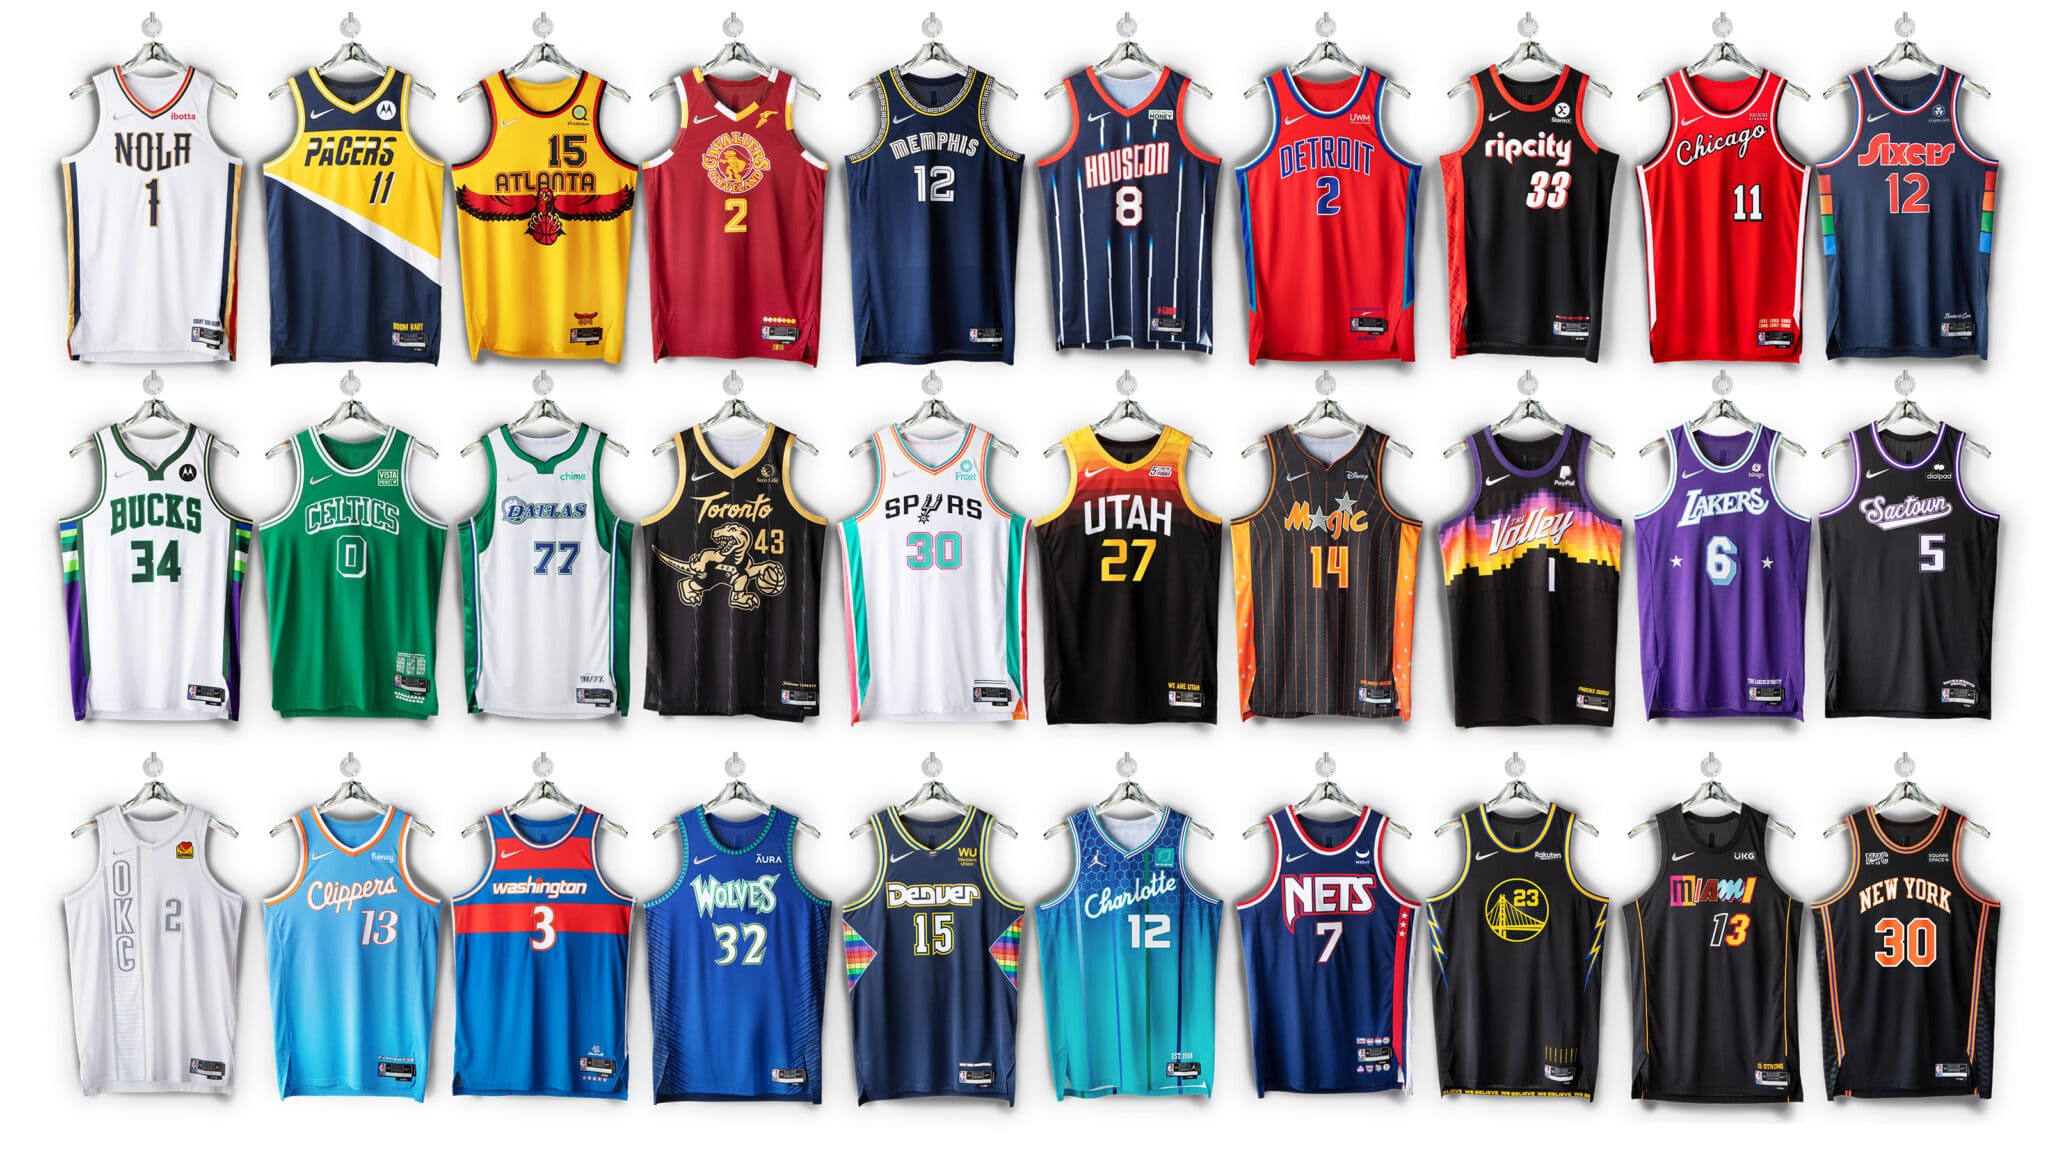 NBA 75th anniversary Nike City edition Jerseys